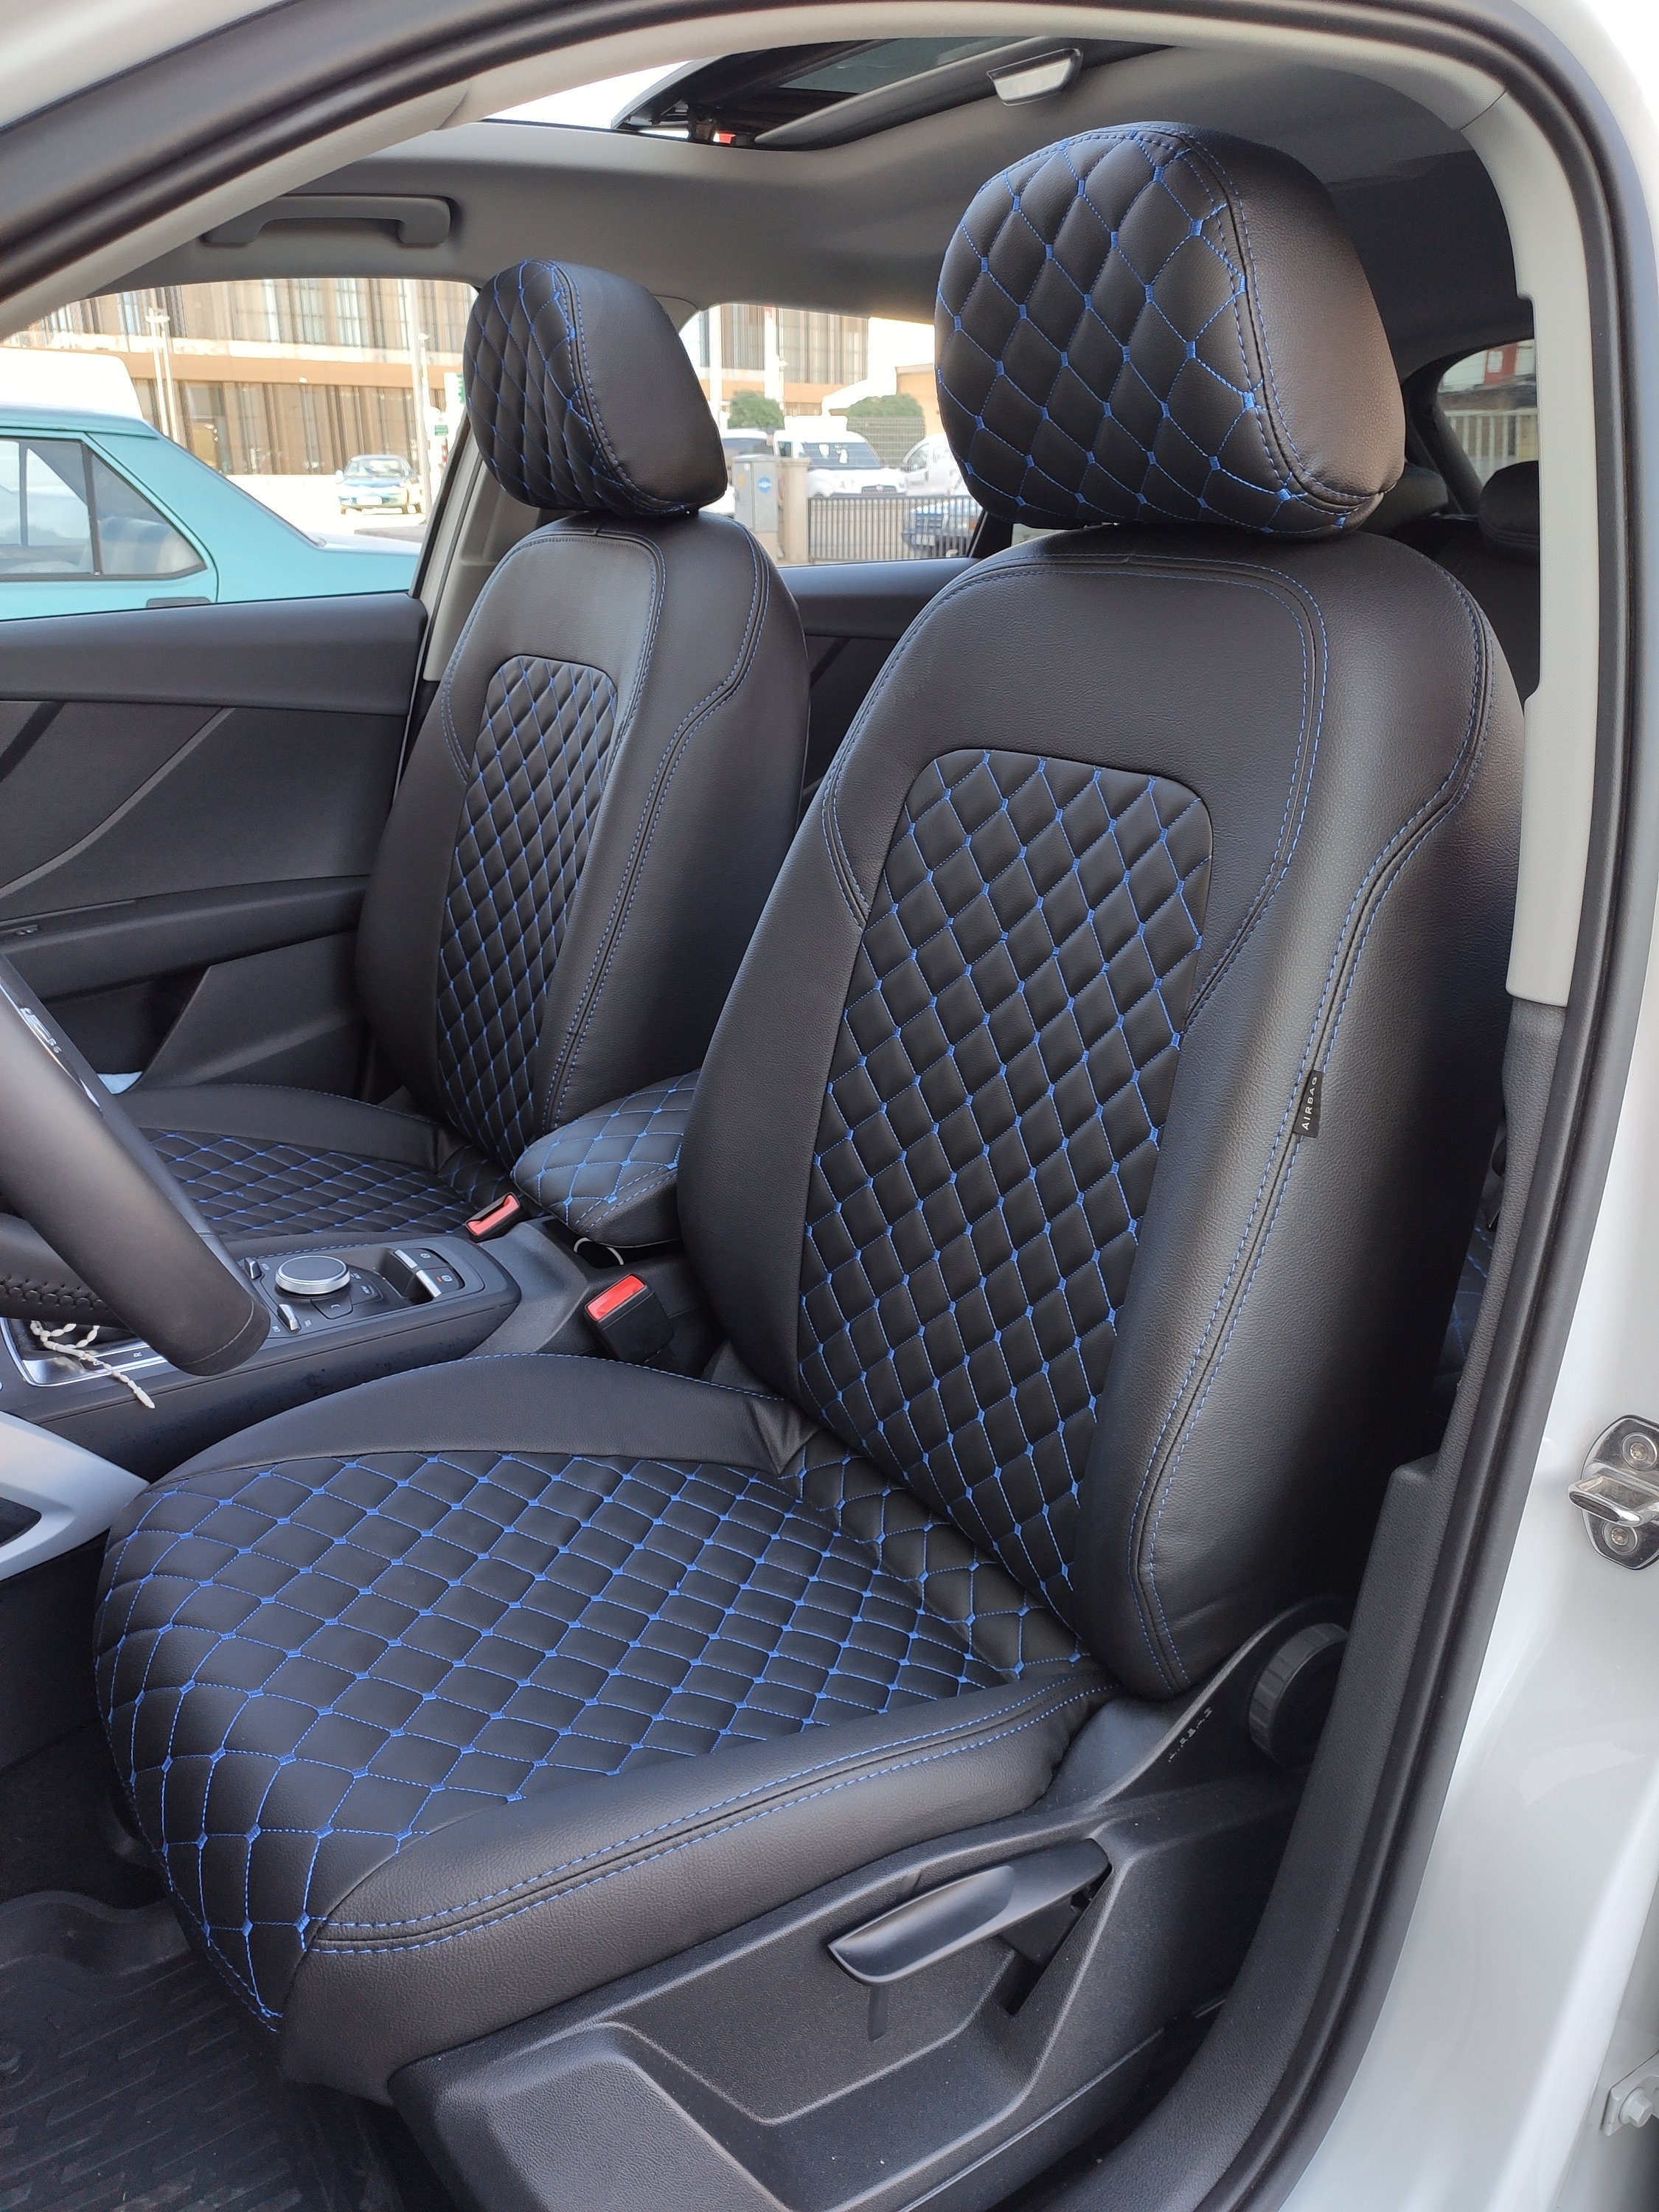 Car Seat Covers Seat Cover for Audi A1 A2 A3 A4 A5 Black Blue PU Le